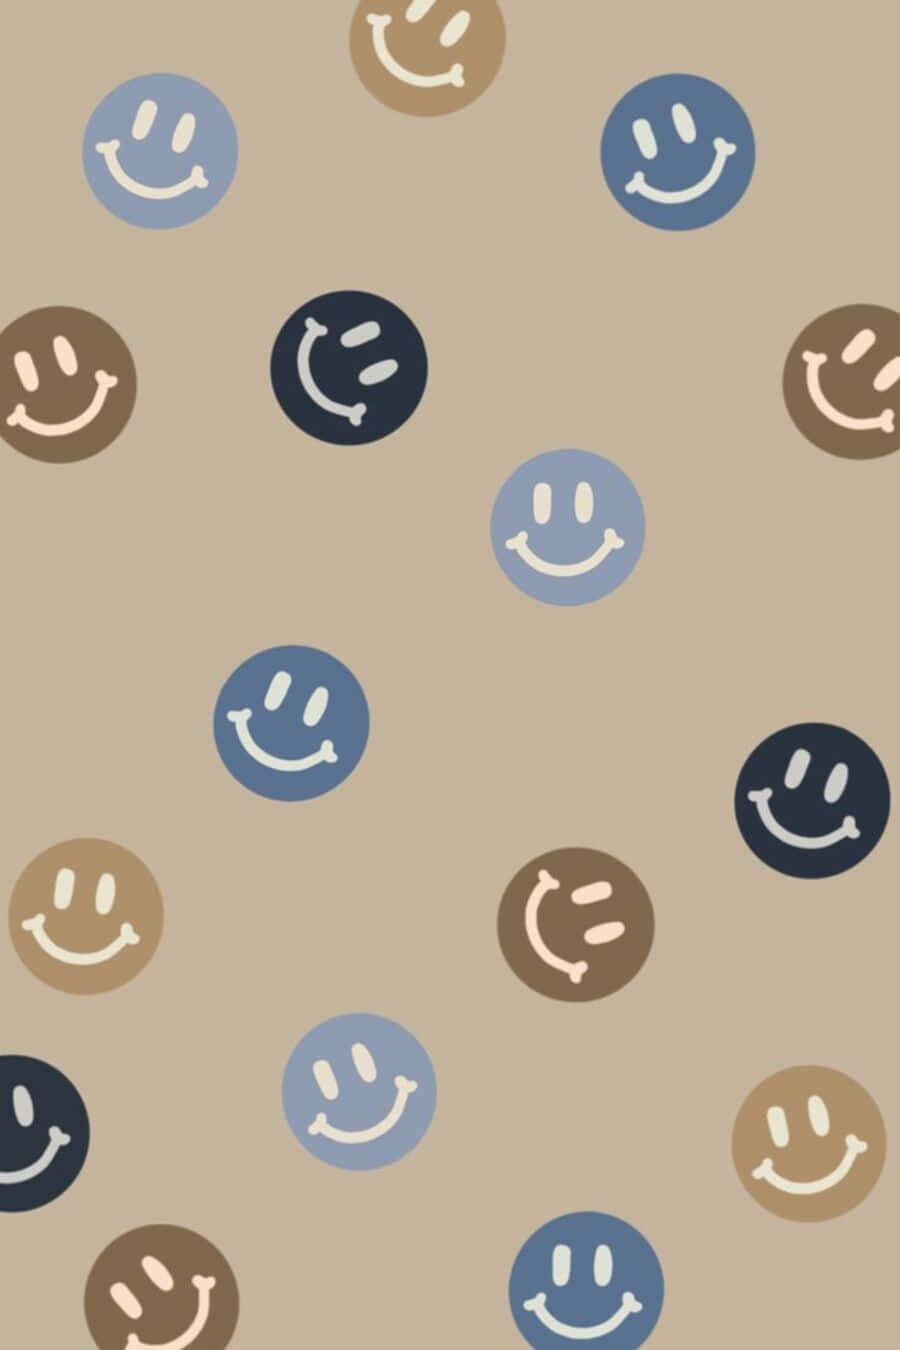 Vibrant Aesthetic Smiley Face Wallpaper